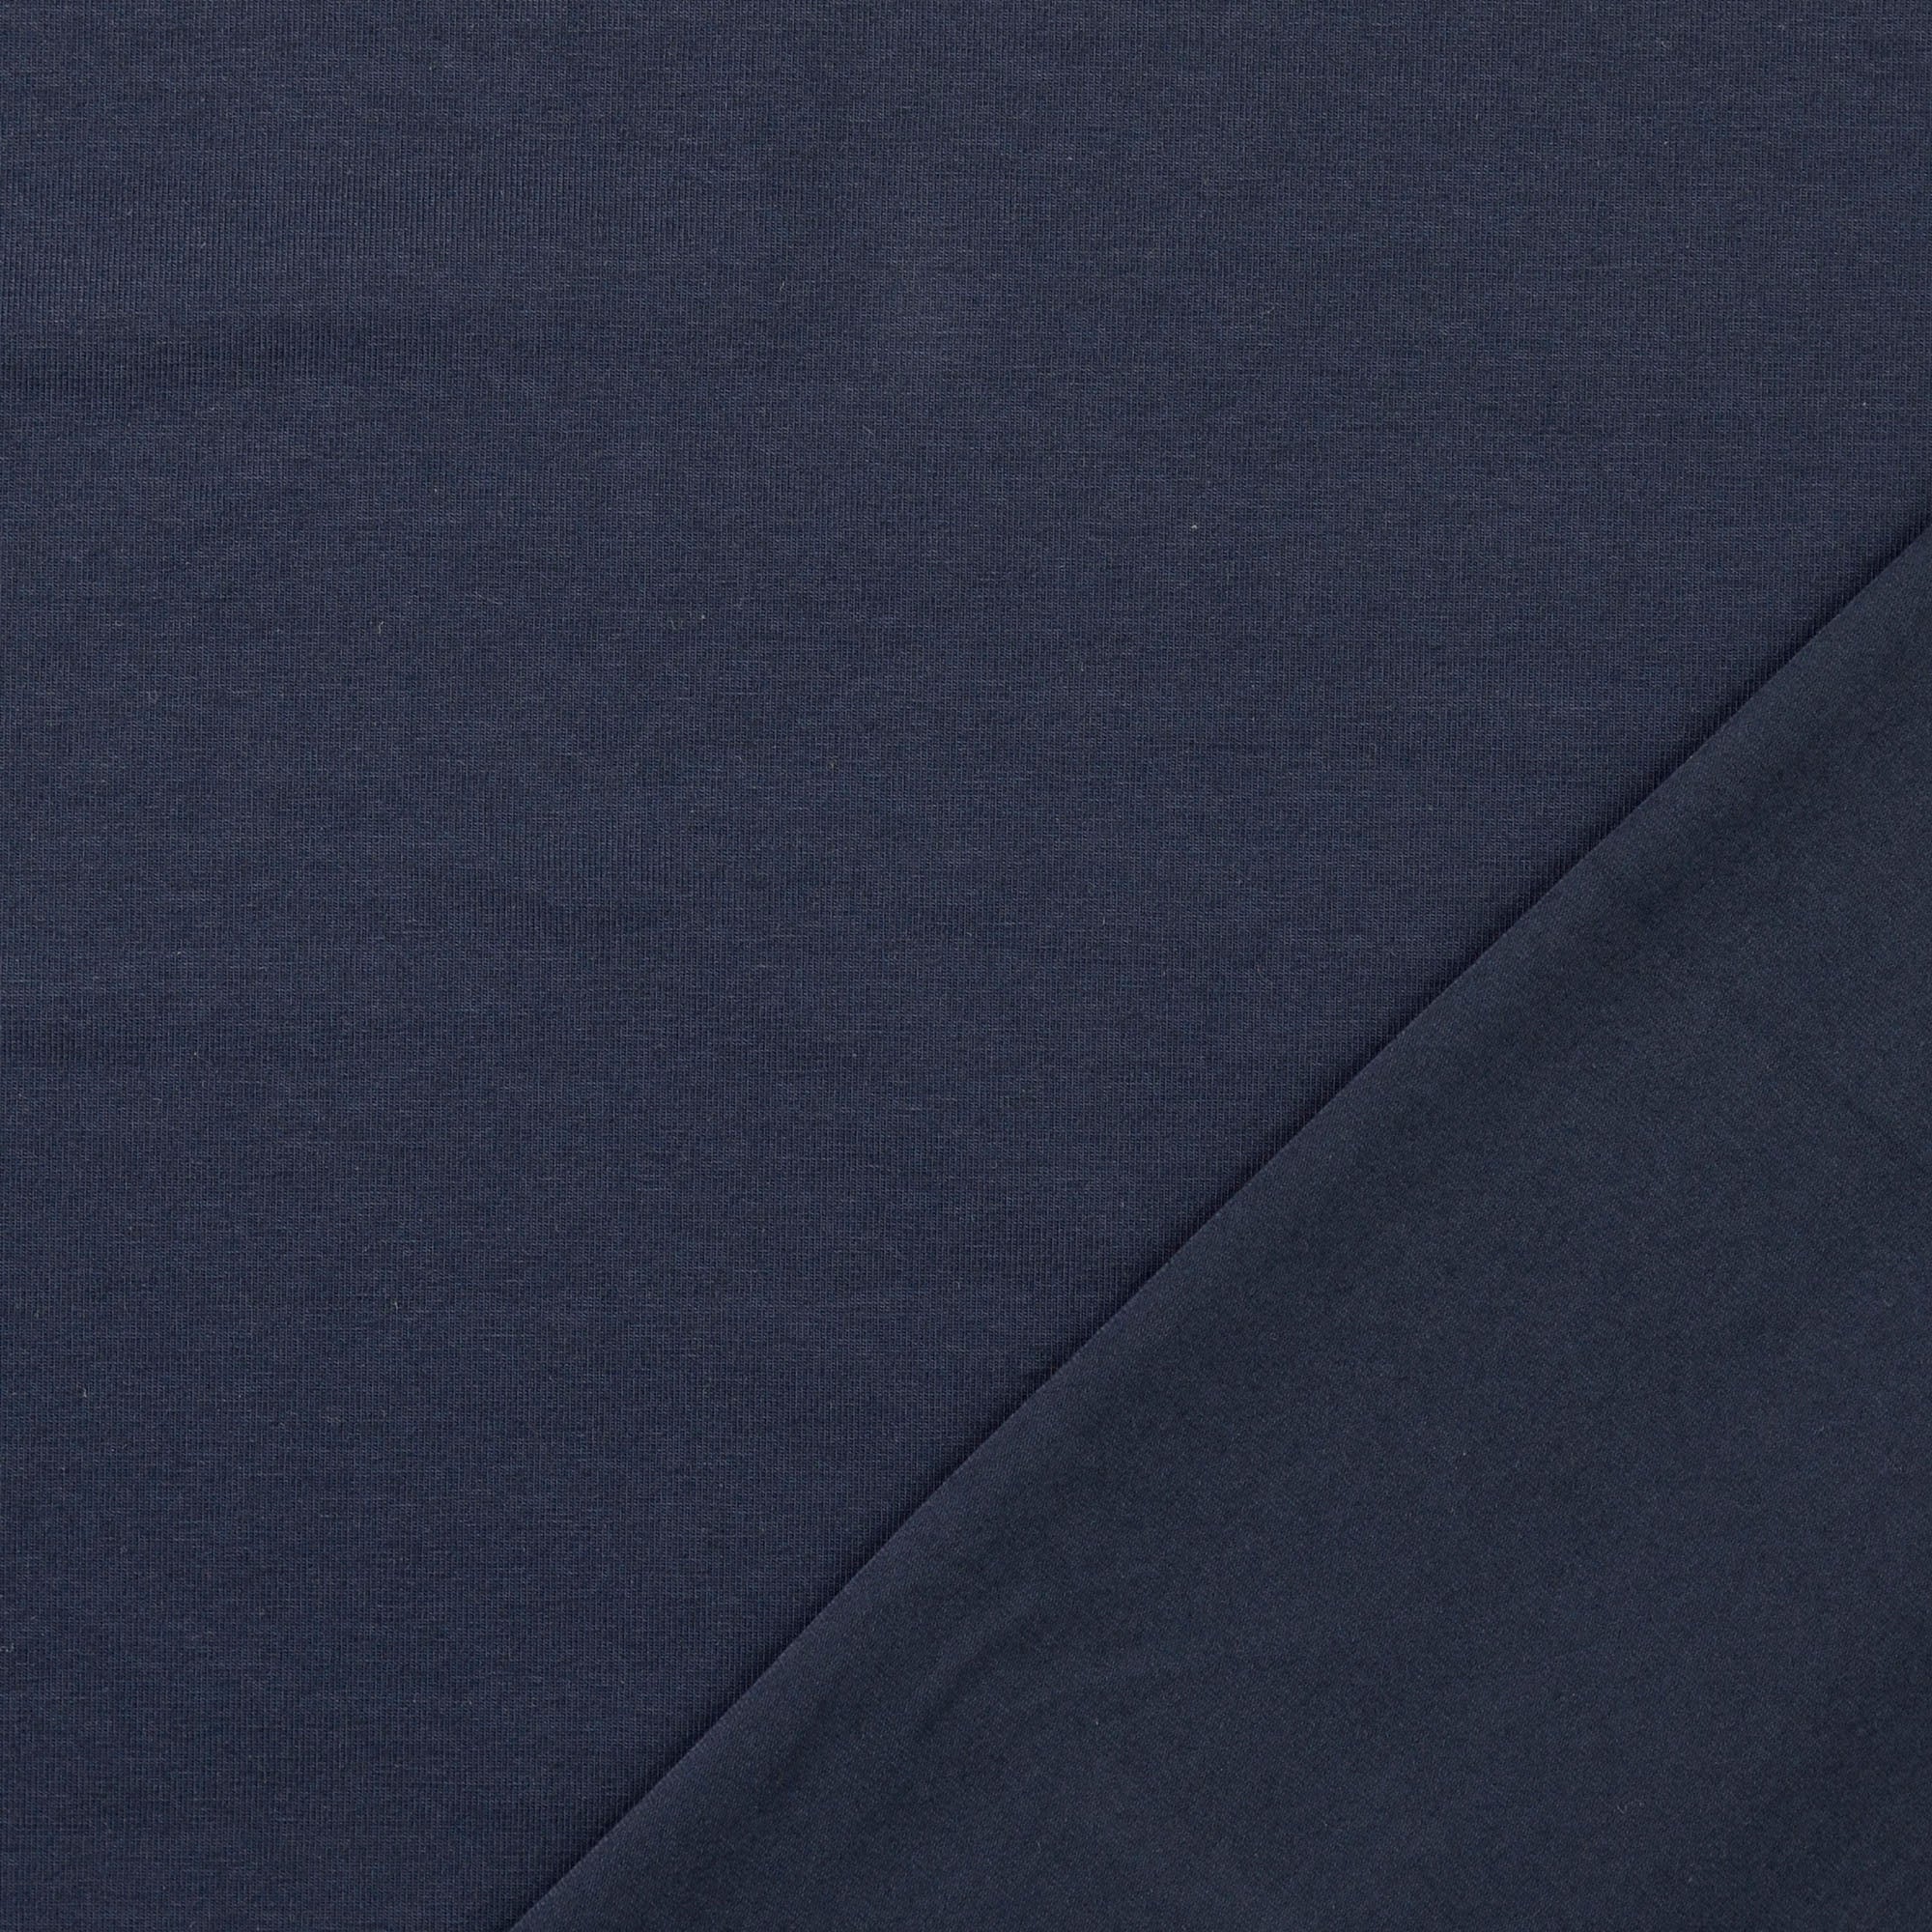 REMNANT 0.96 Metre - Essential Chic Dark Navy Plain Cotton Jersey Fabric